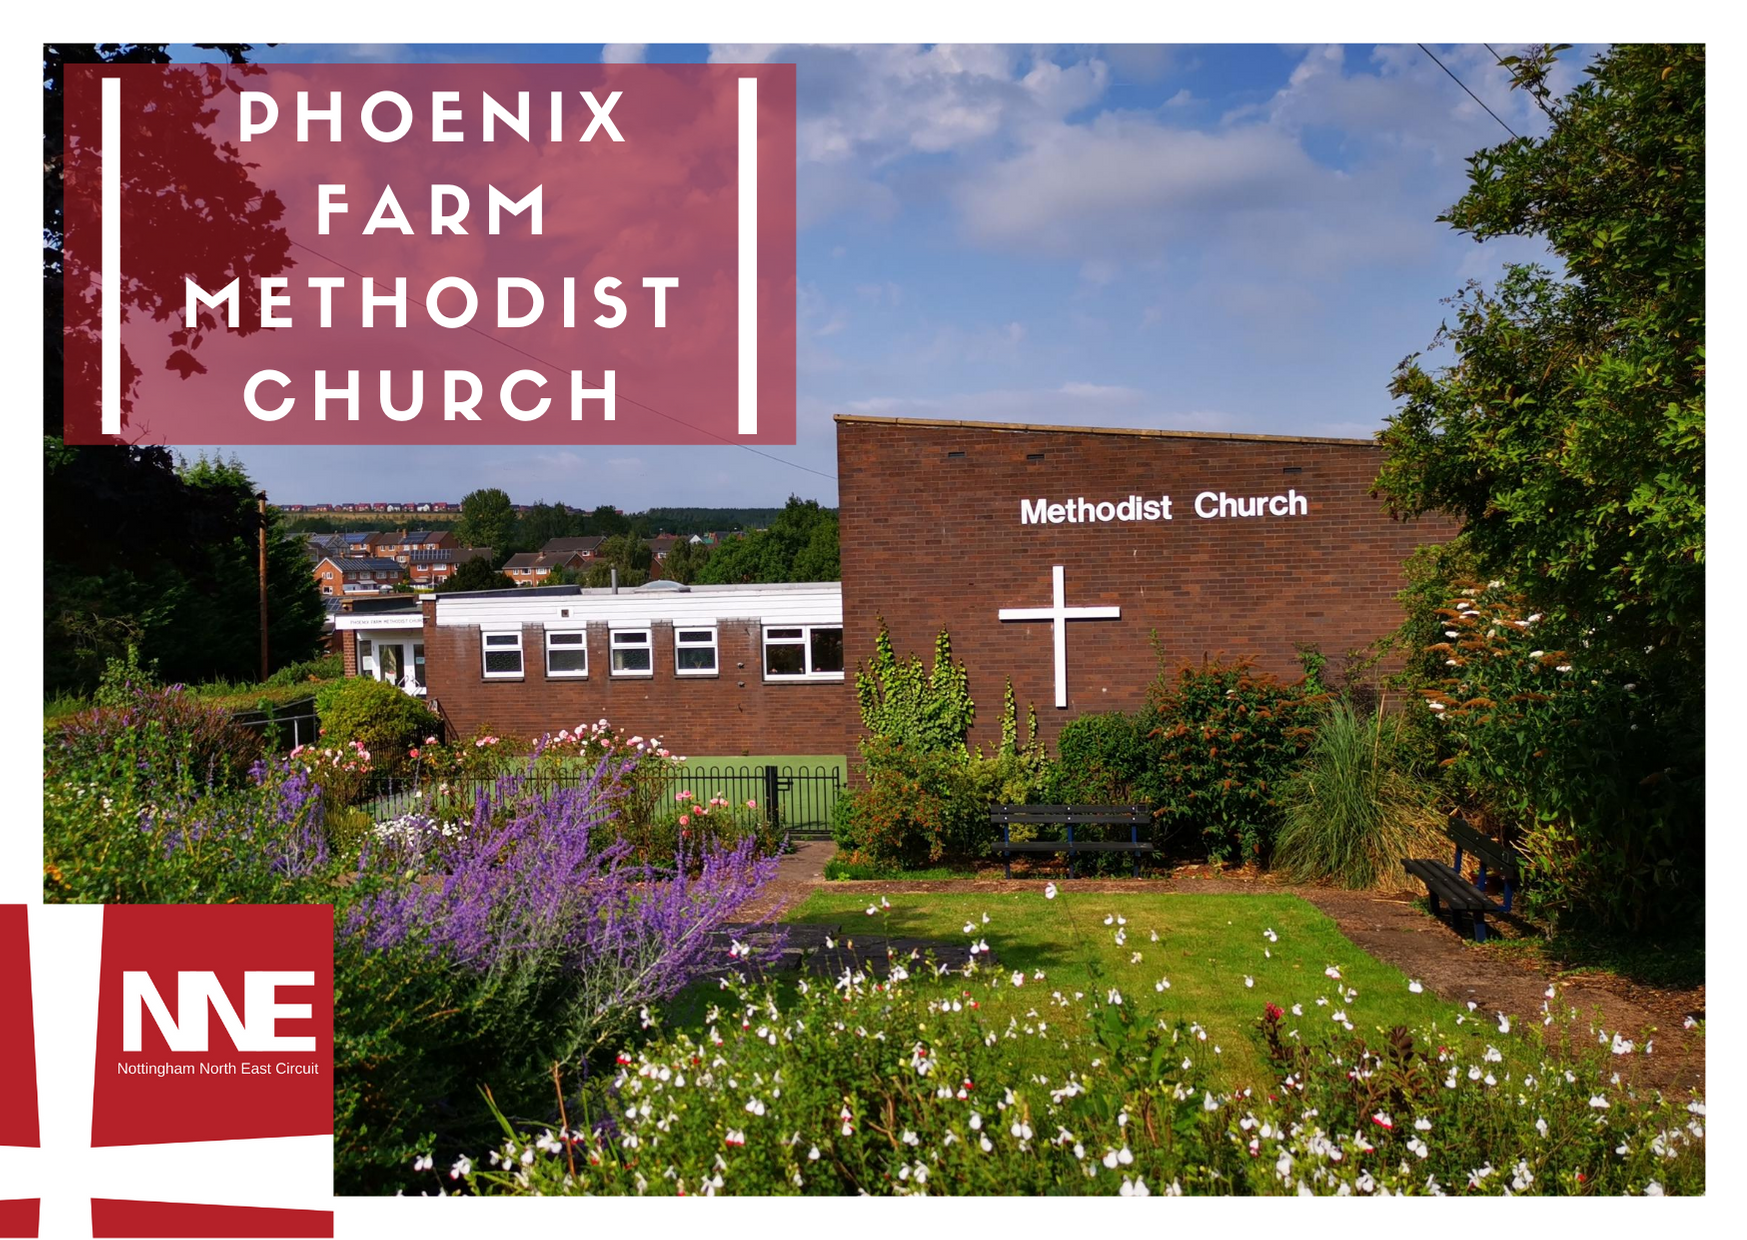 Phoenix Farm Methodist Church